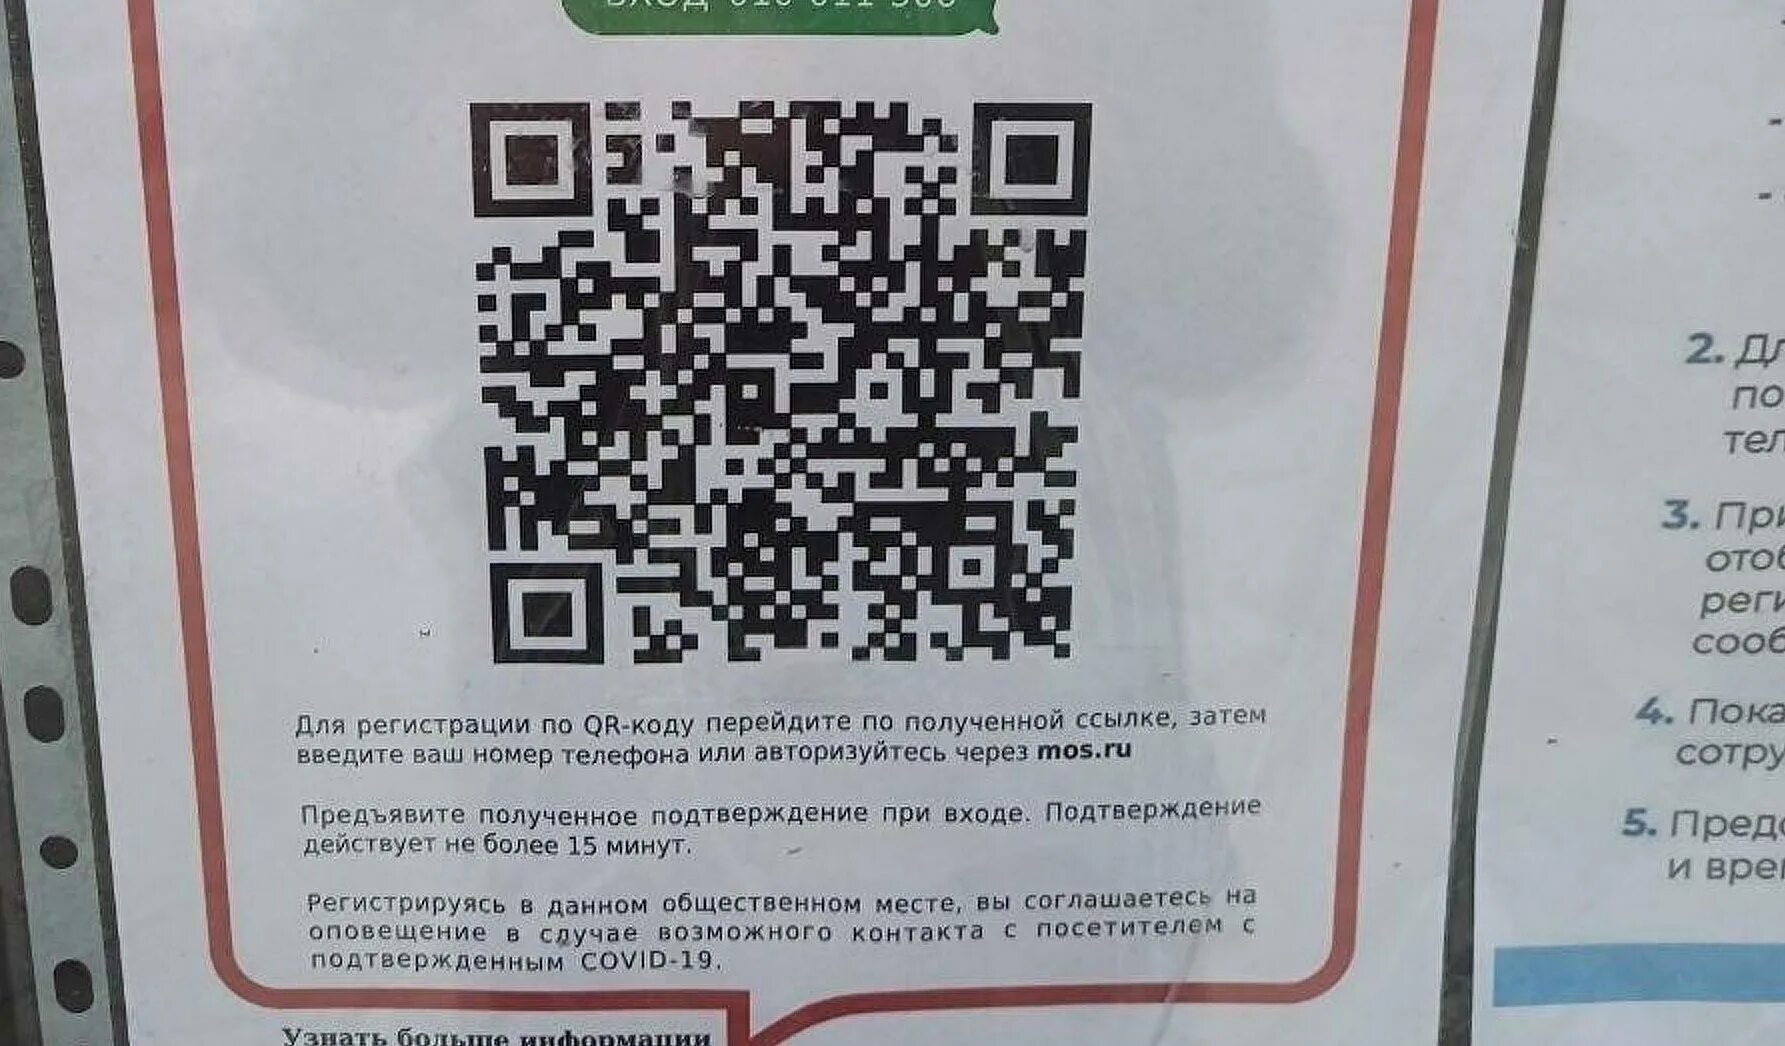 QR код. Таблички с QR кодами. Российский QR код. Плакат с QR кодом. Количество qr кодов